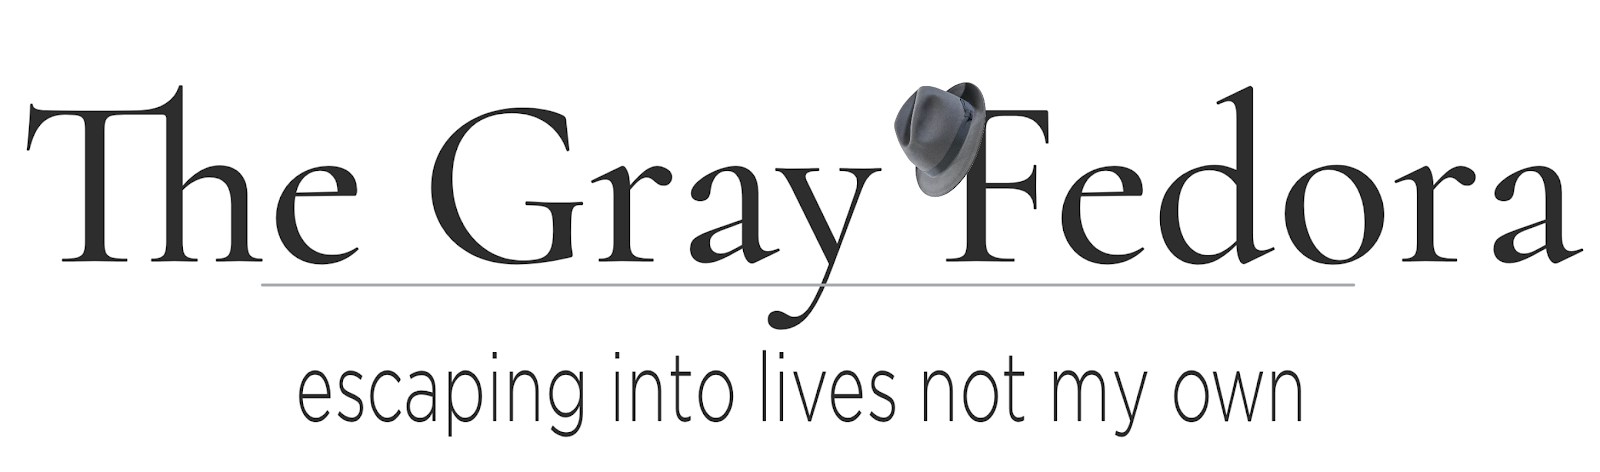 The Gray Fedora